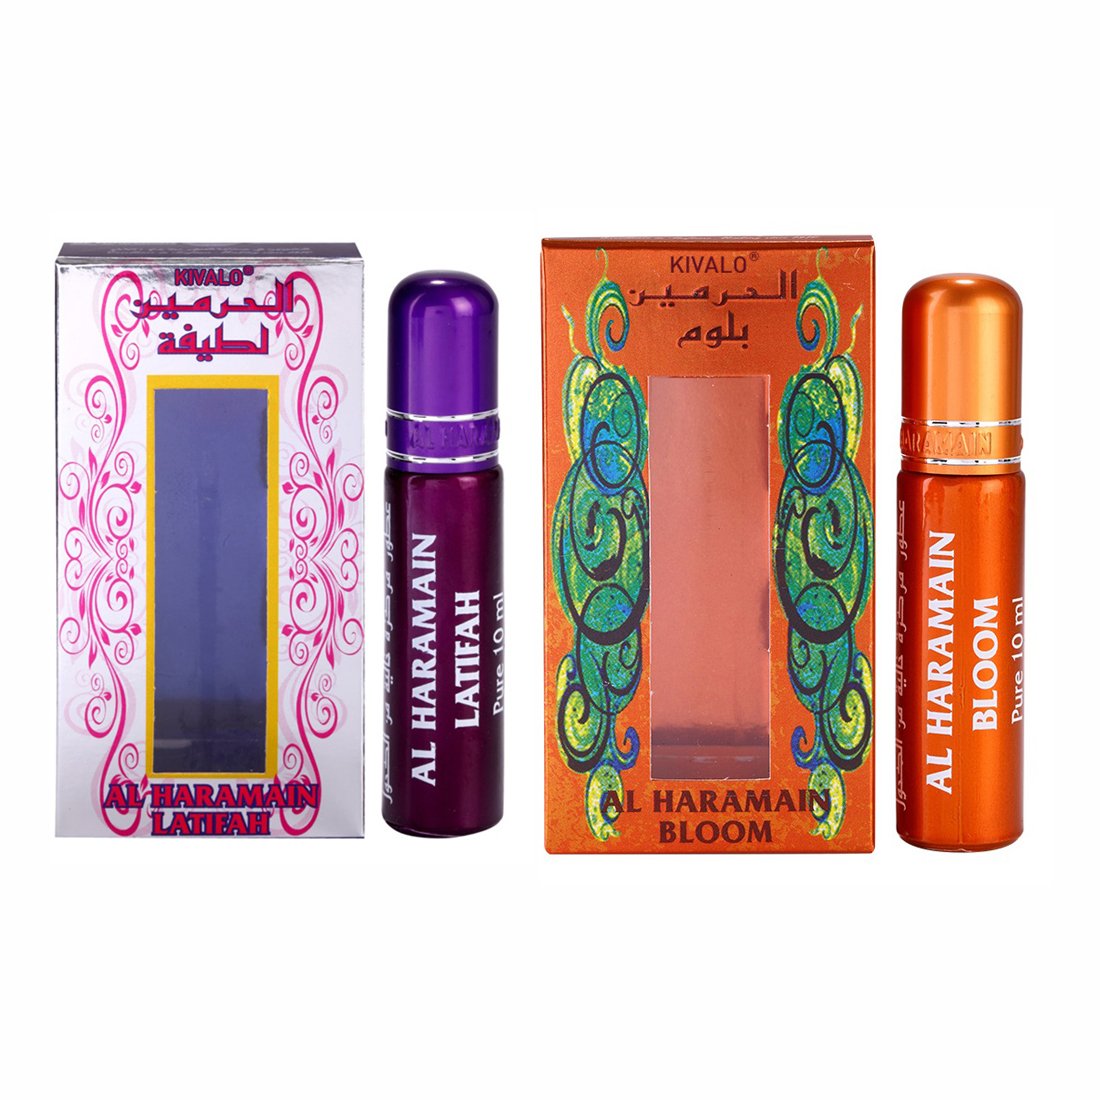 Al Haramain Latifah & Bloom Fragrance Pure Original Roll On Attar Combo Pack of 2 x 10 ml